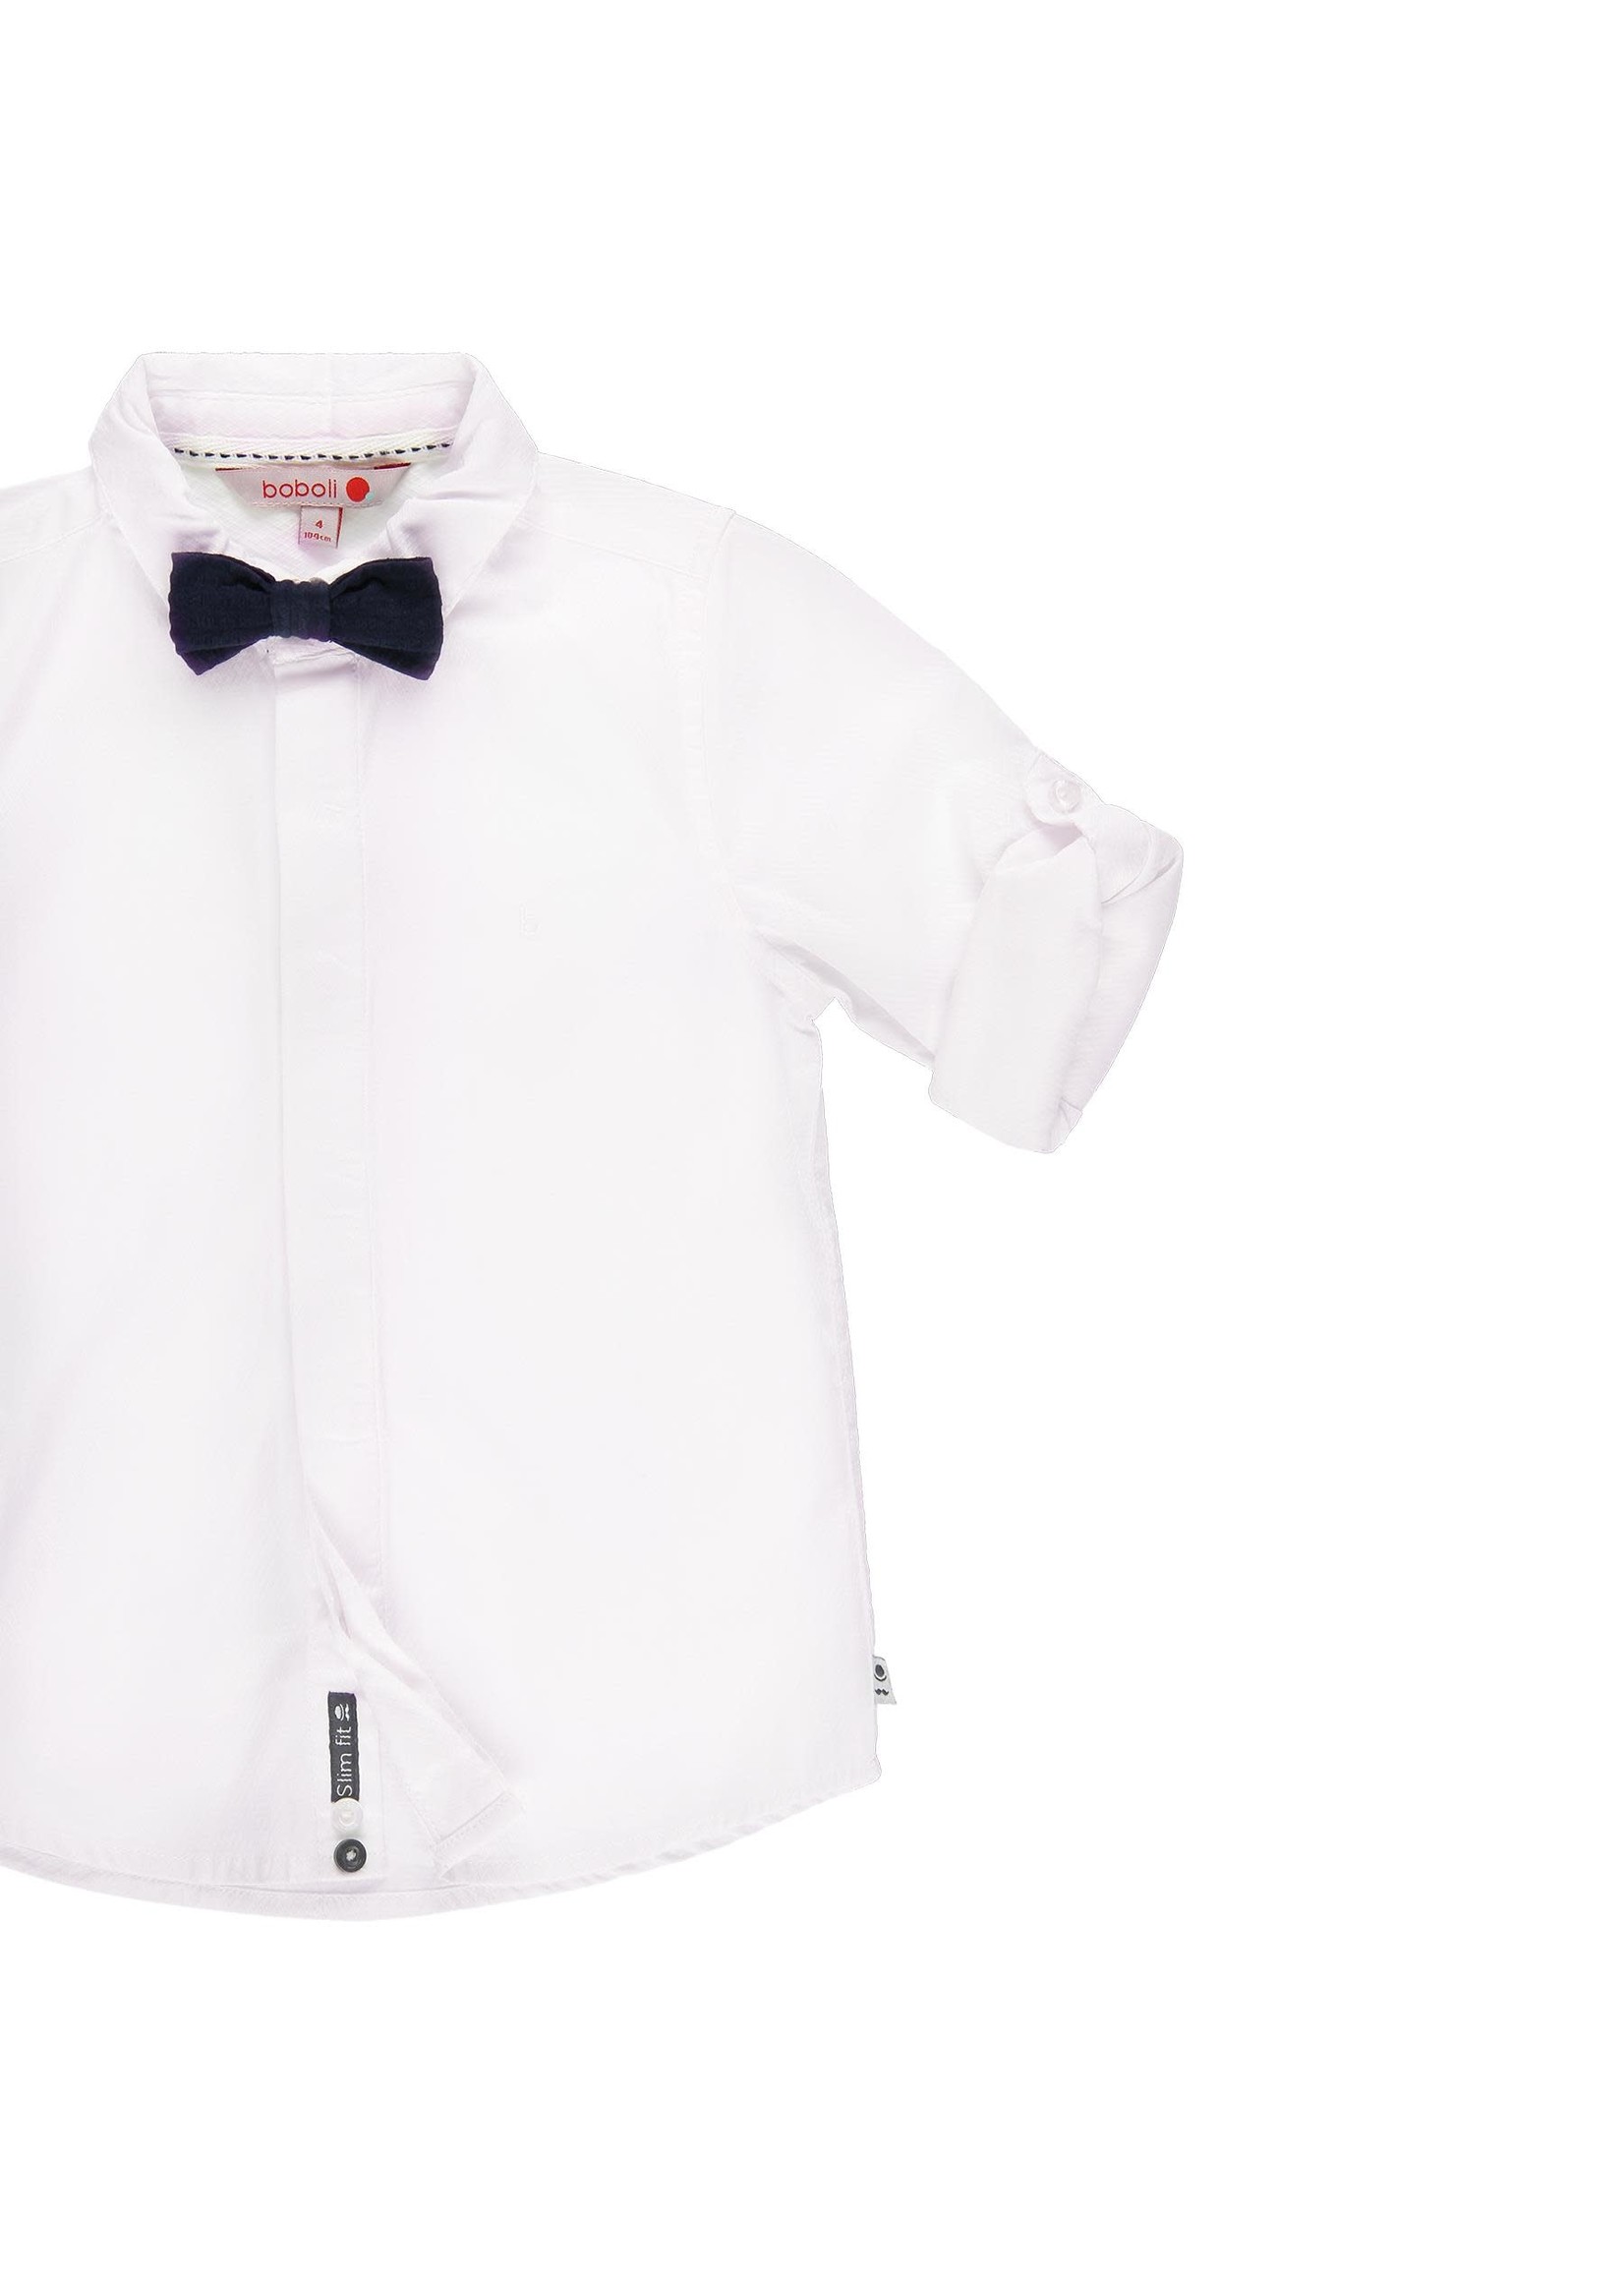 Boboli Long sleeves shirt for boy WHITE 739032